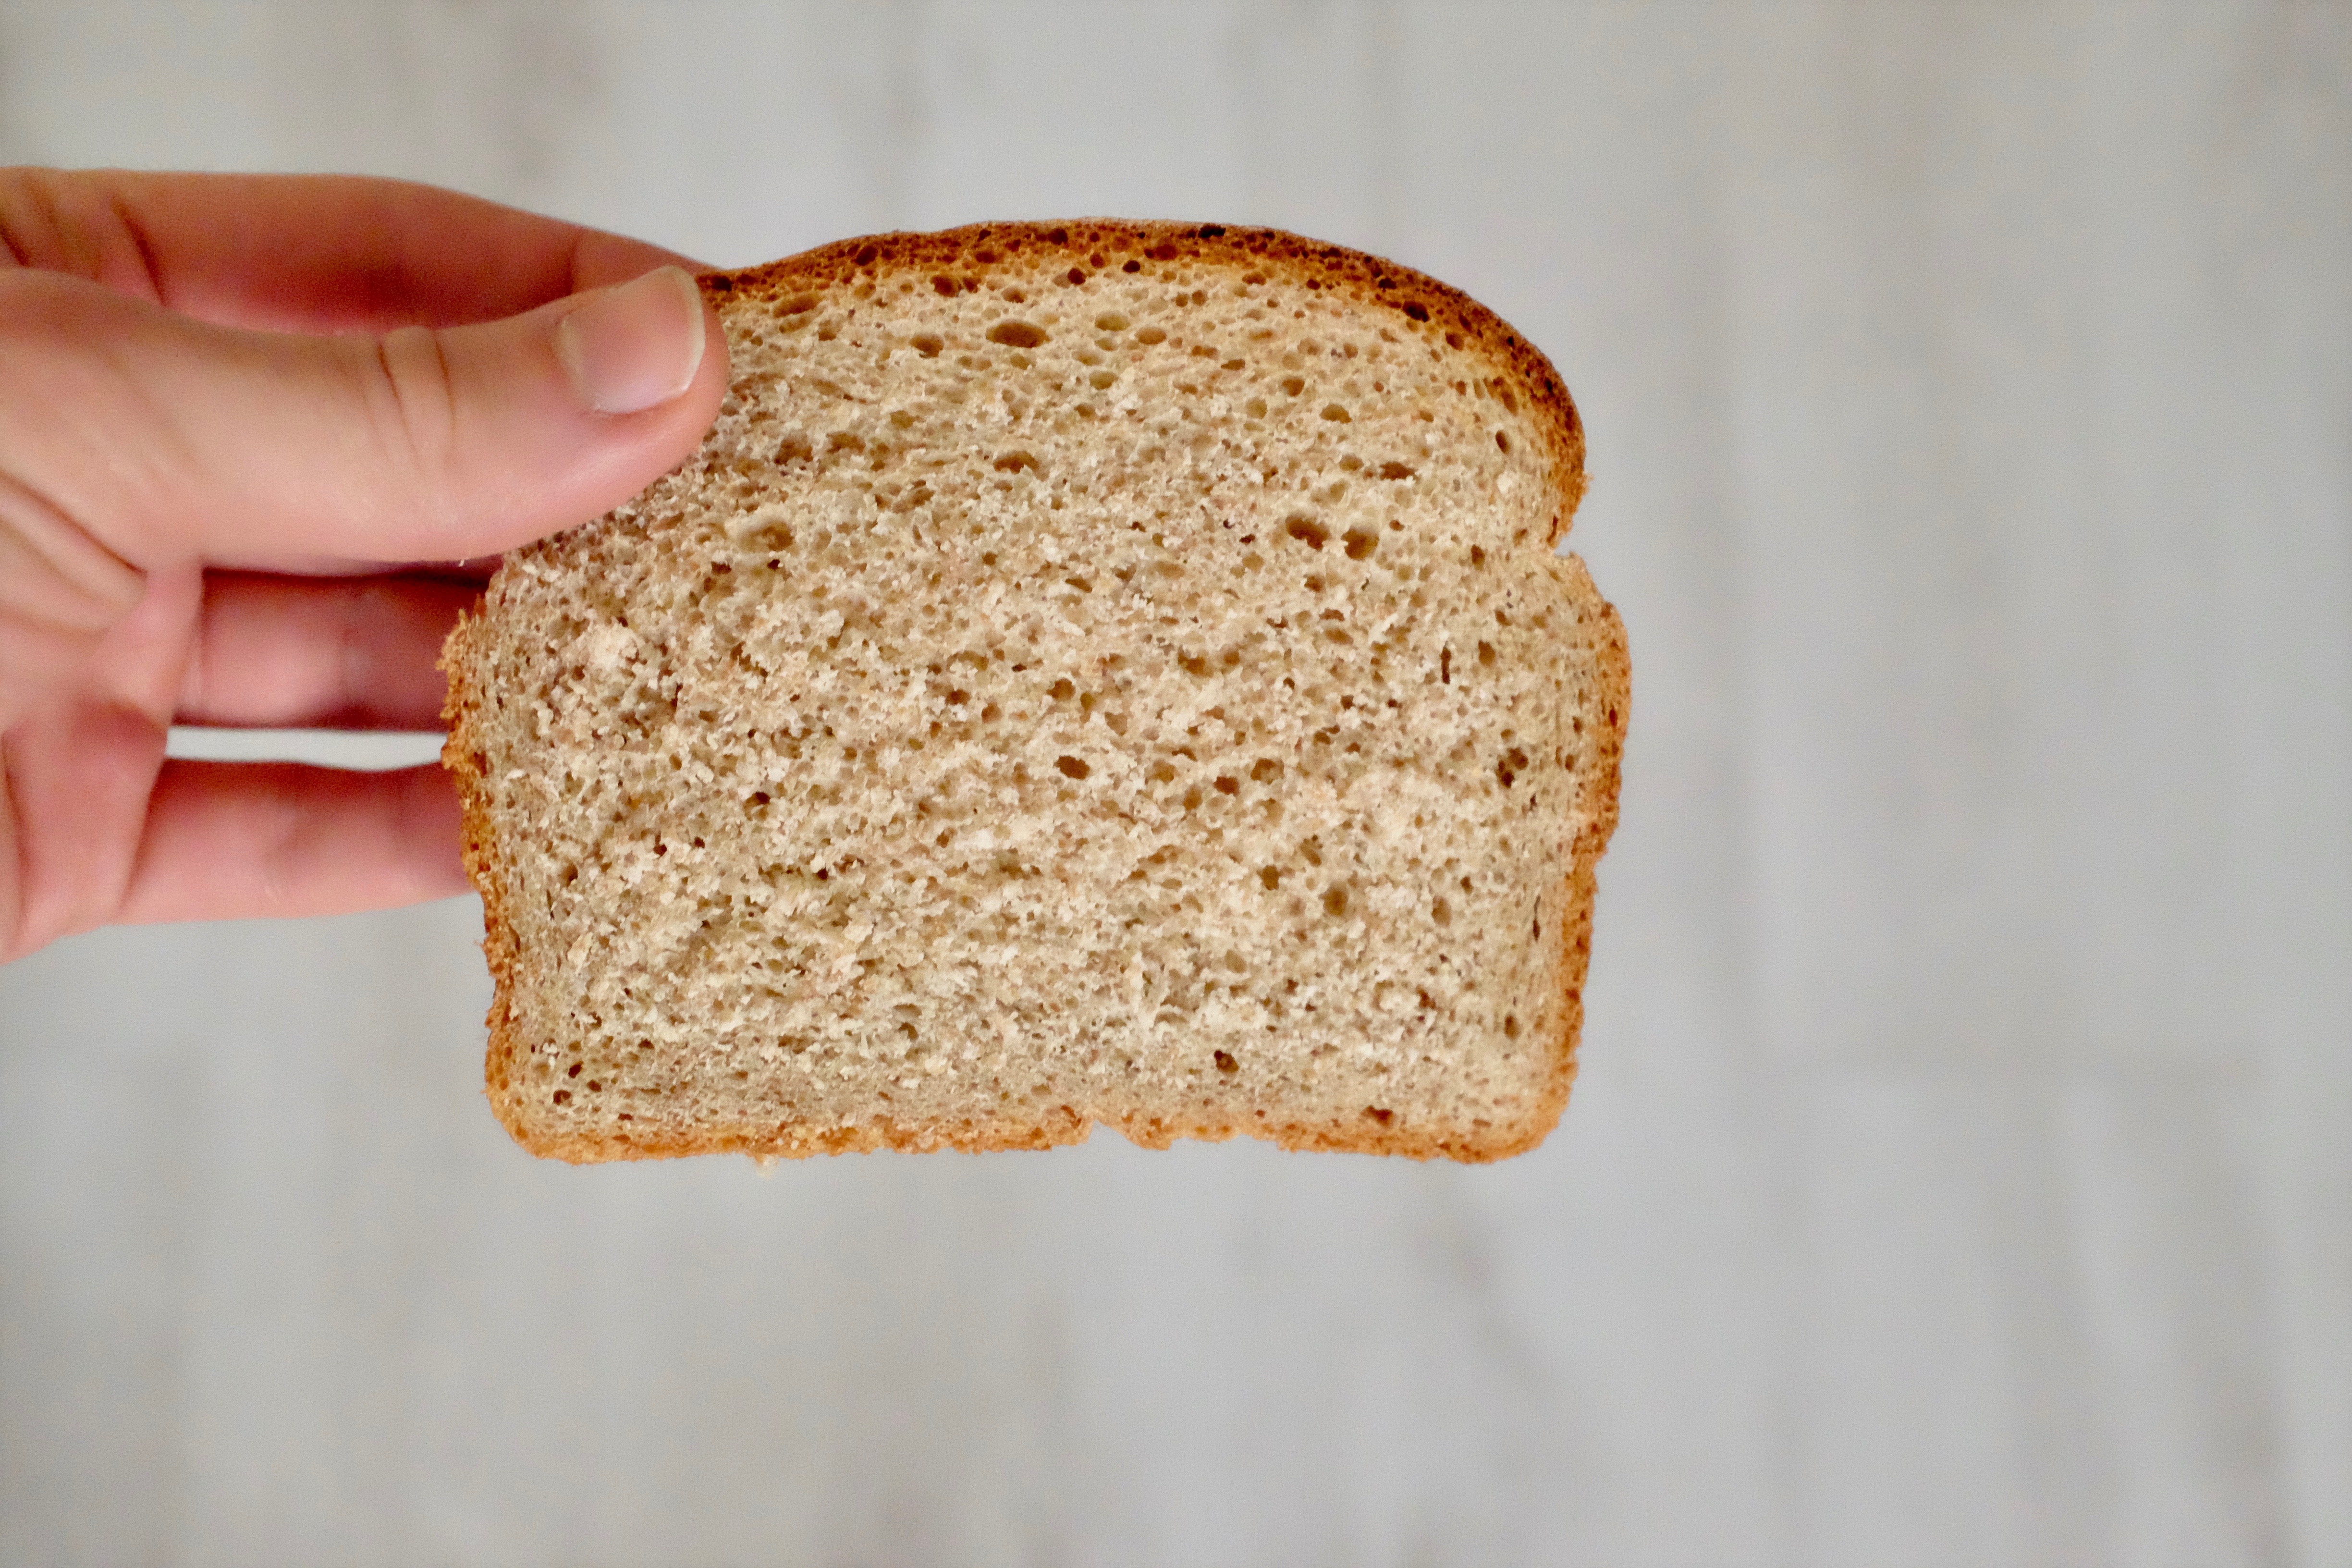 An image of a bread called “Quick Hartog Volkoren”